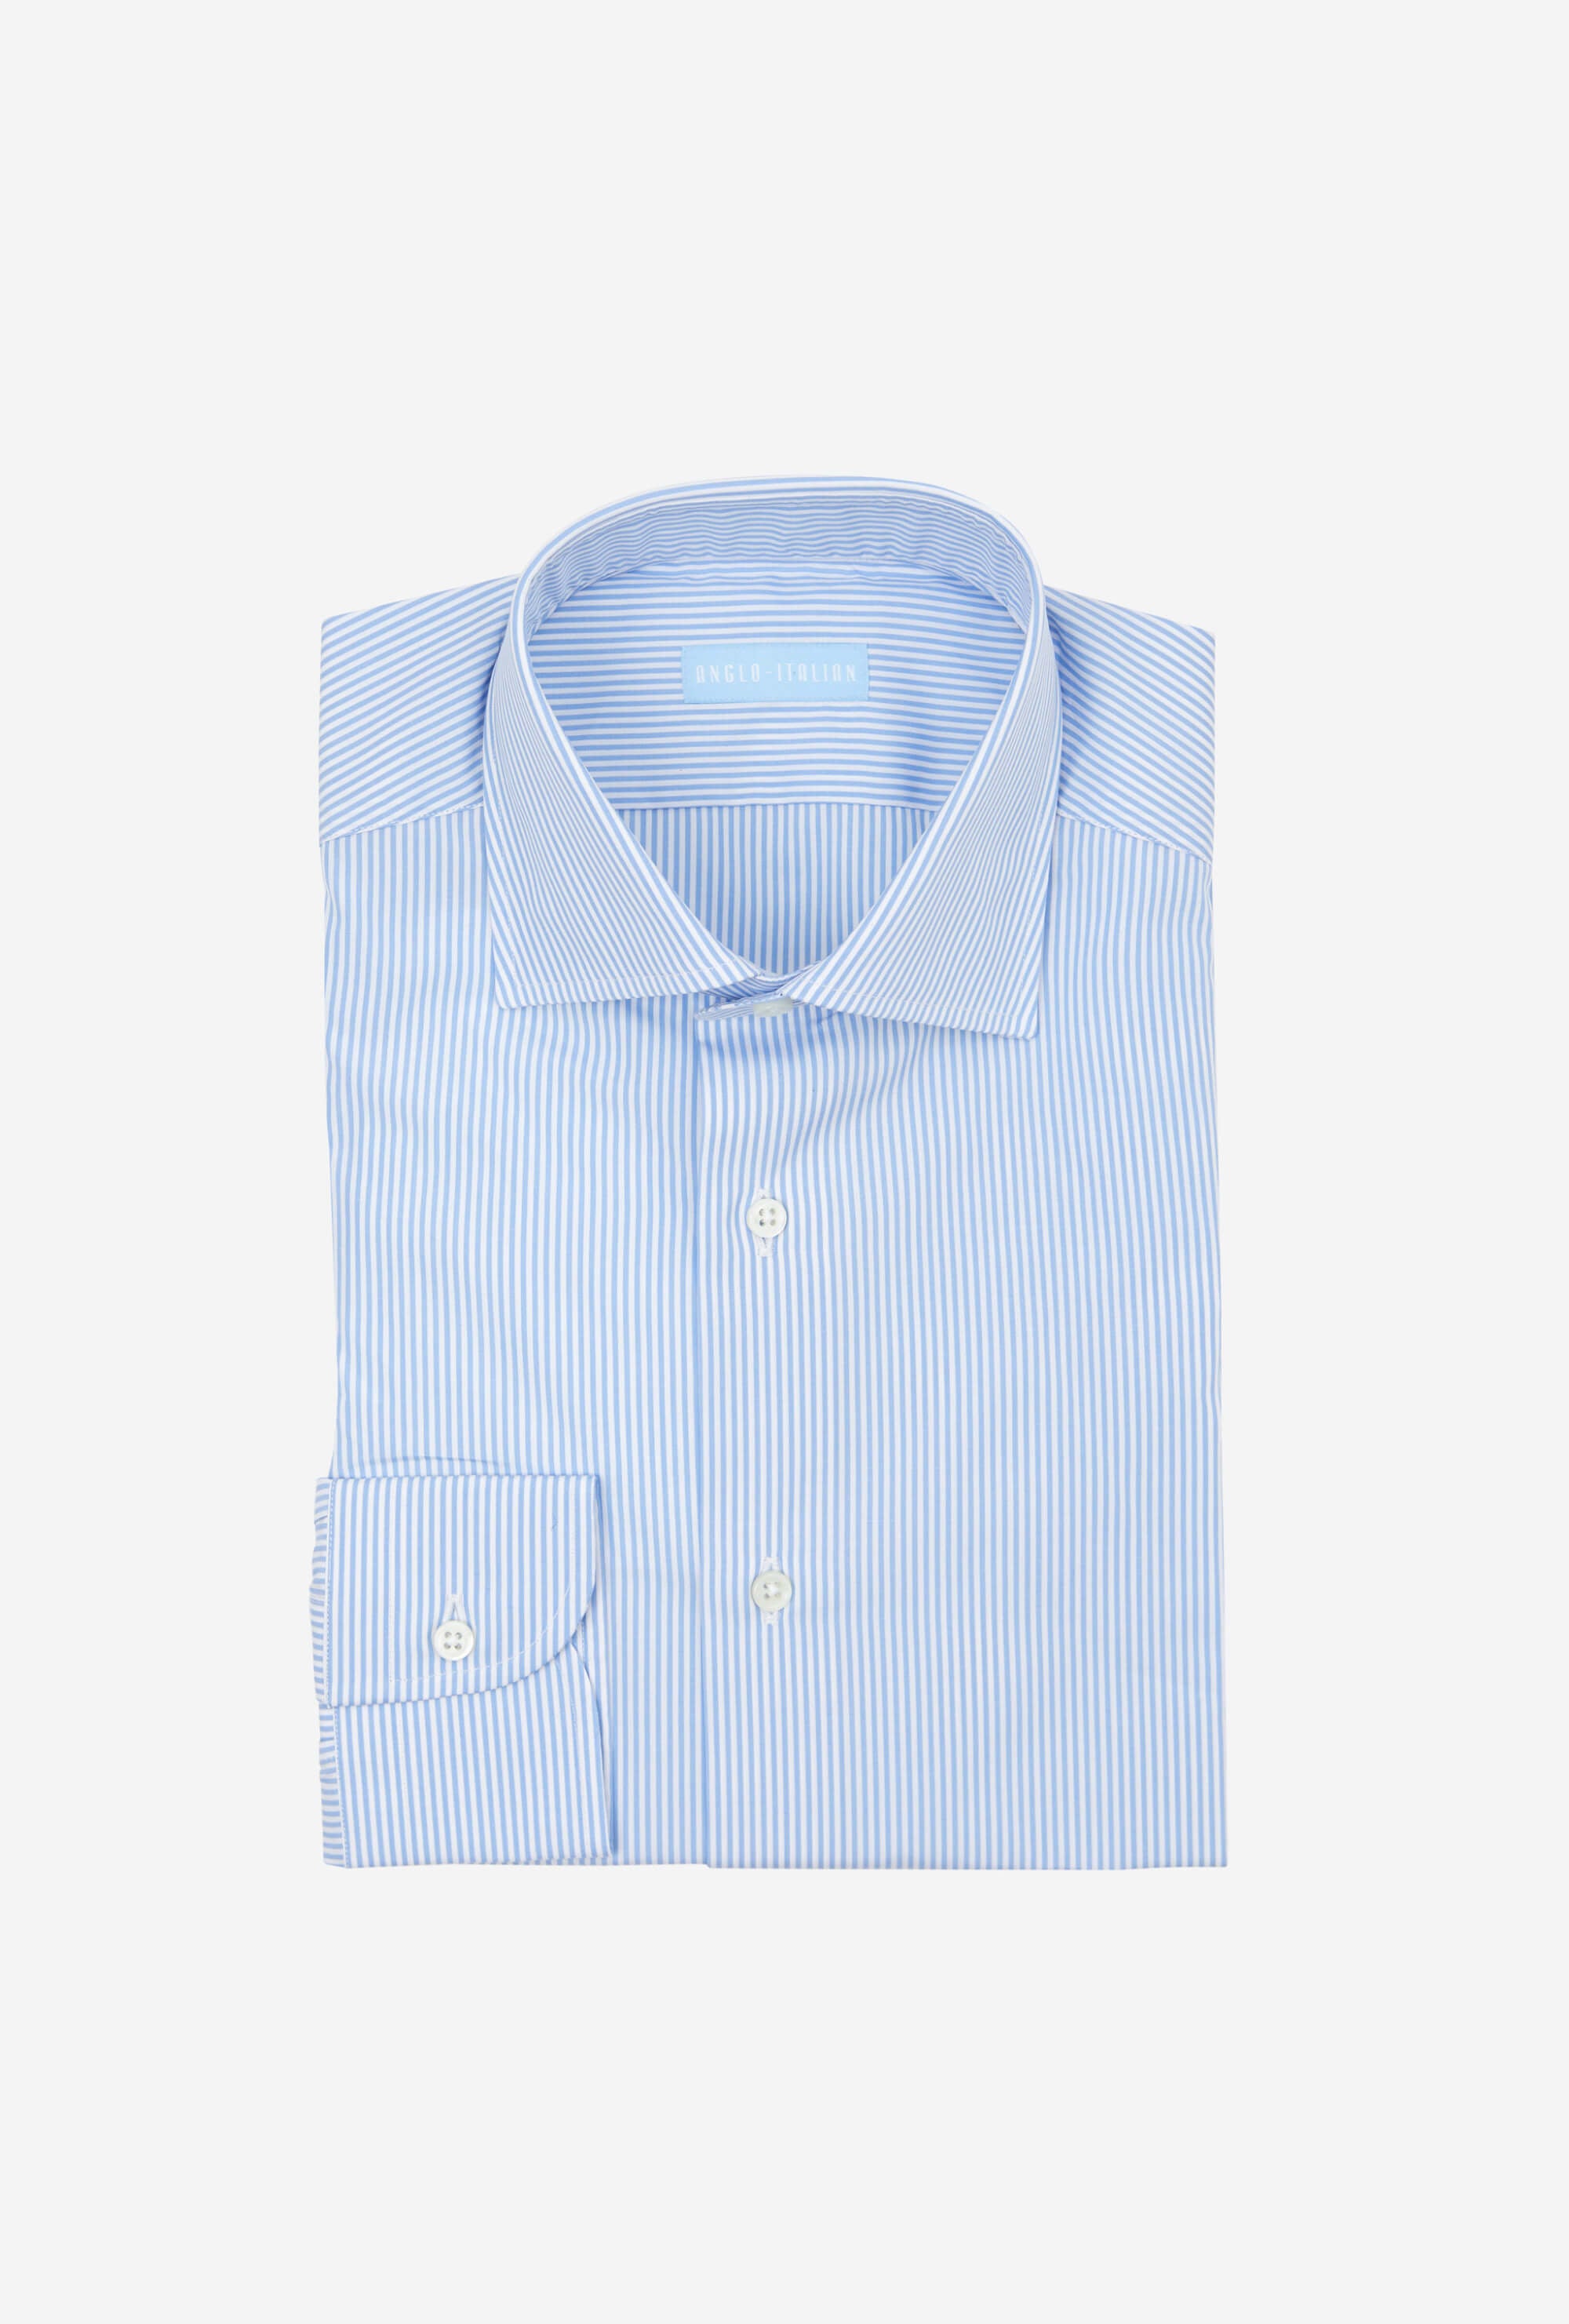 Spread Collar Shirt Cotton Bengal Mid-Blue Stripe